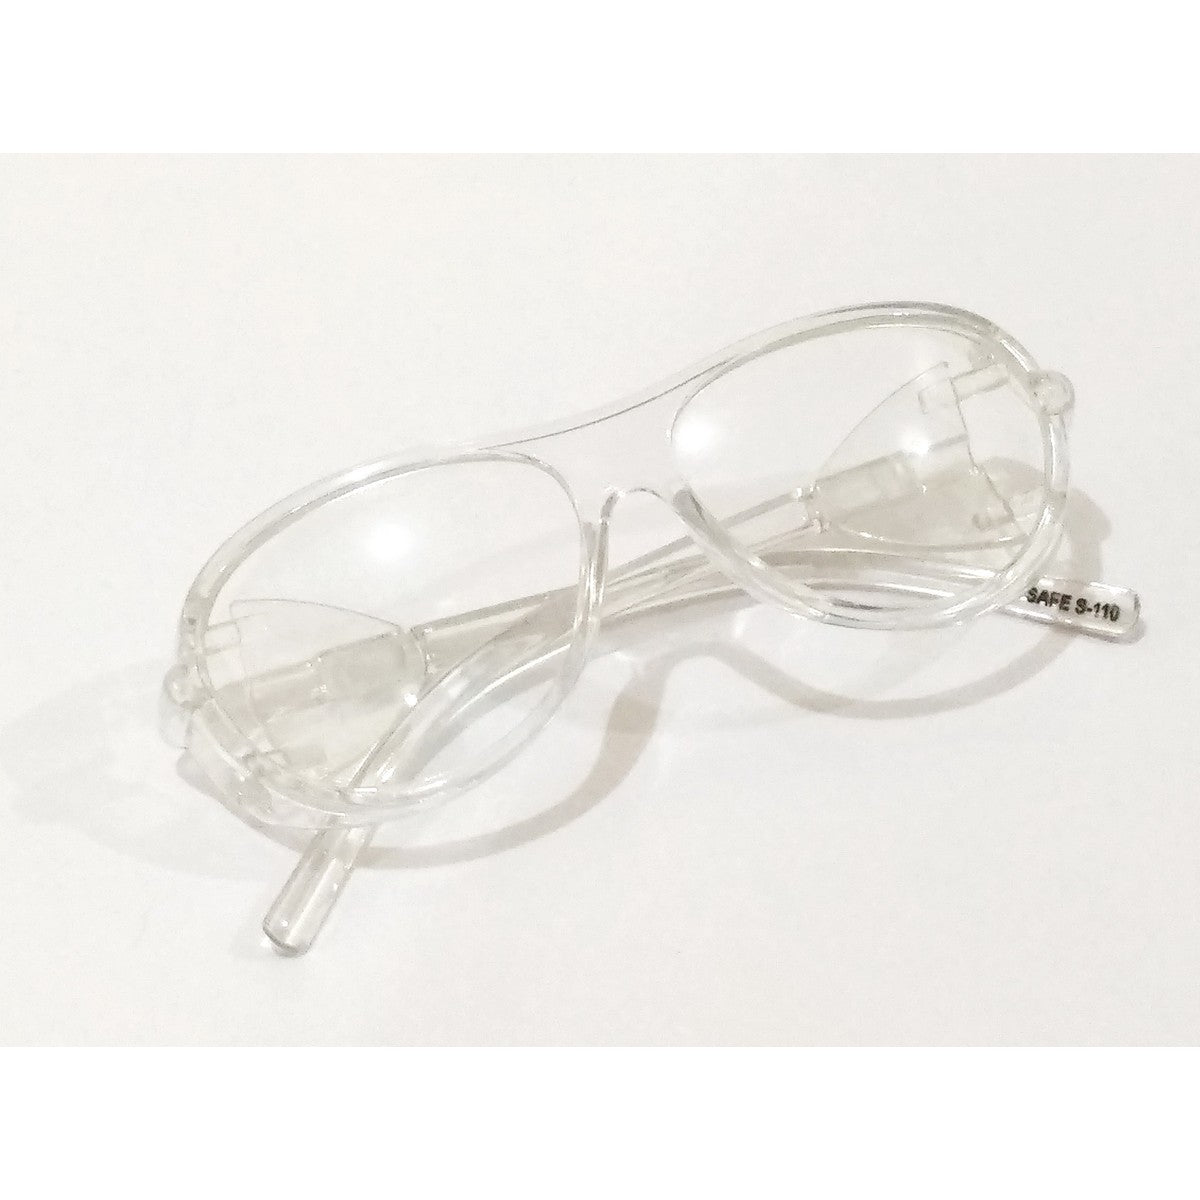 Clear Prescription Eye Safety Glasses M110-41